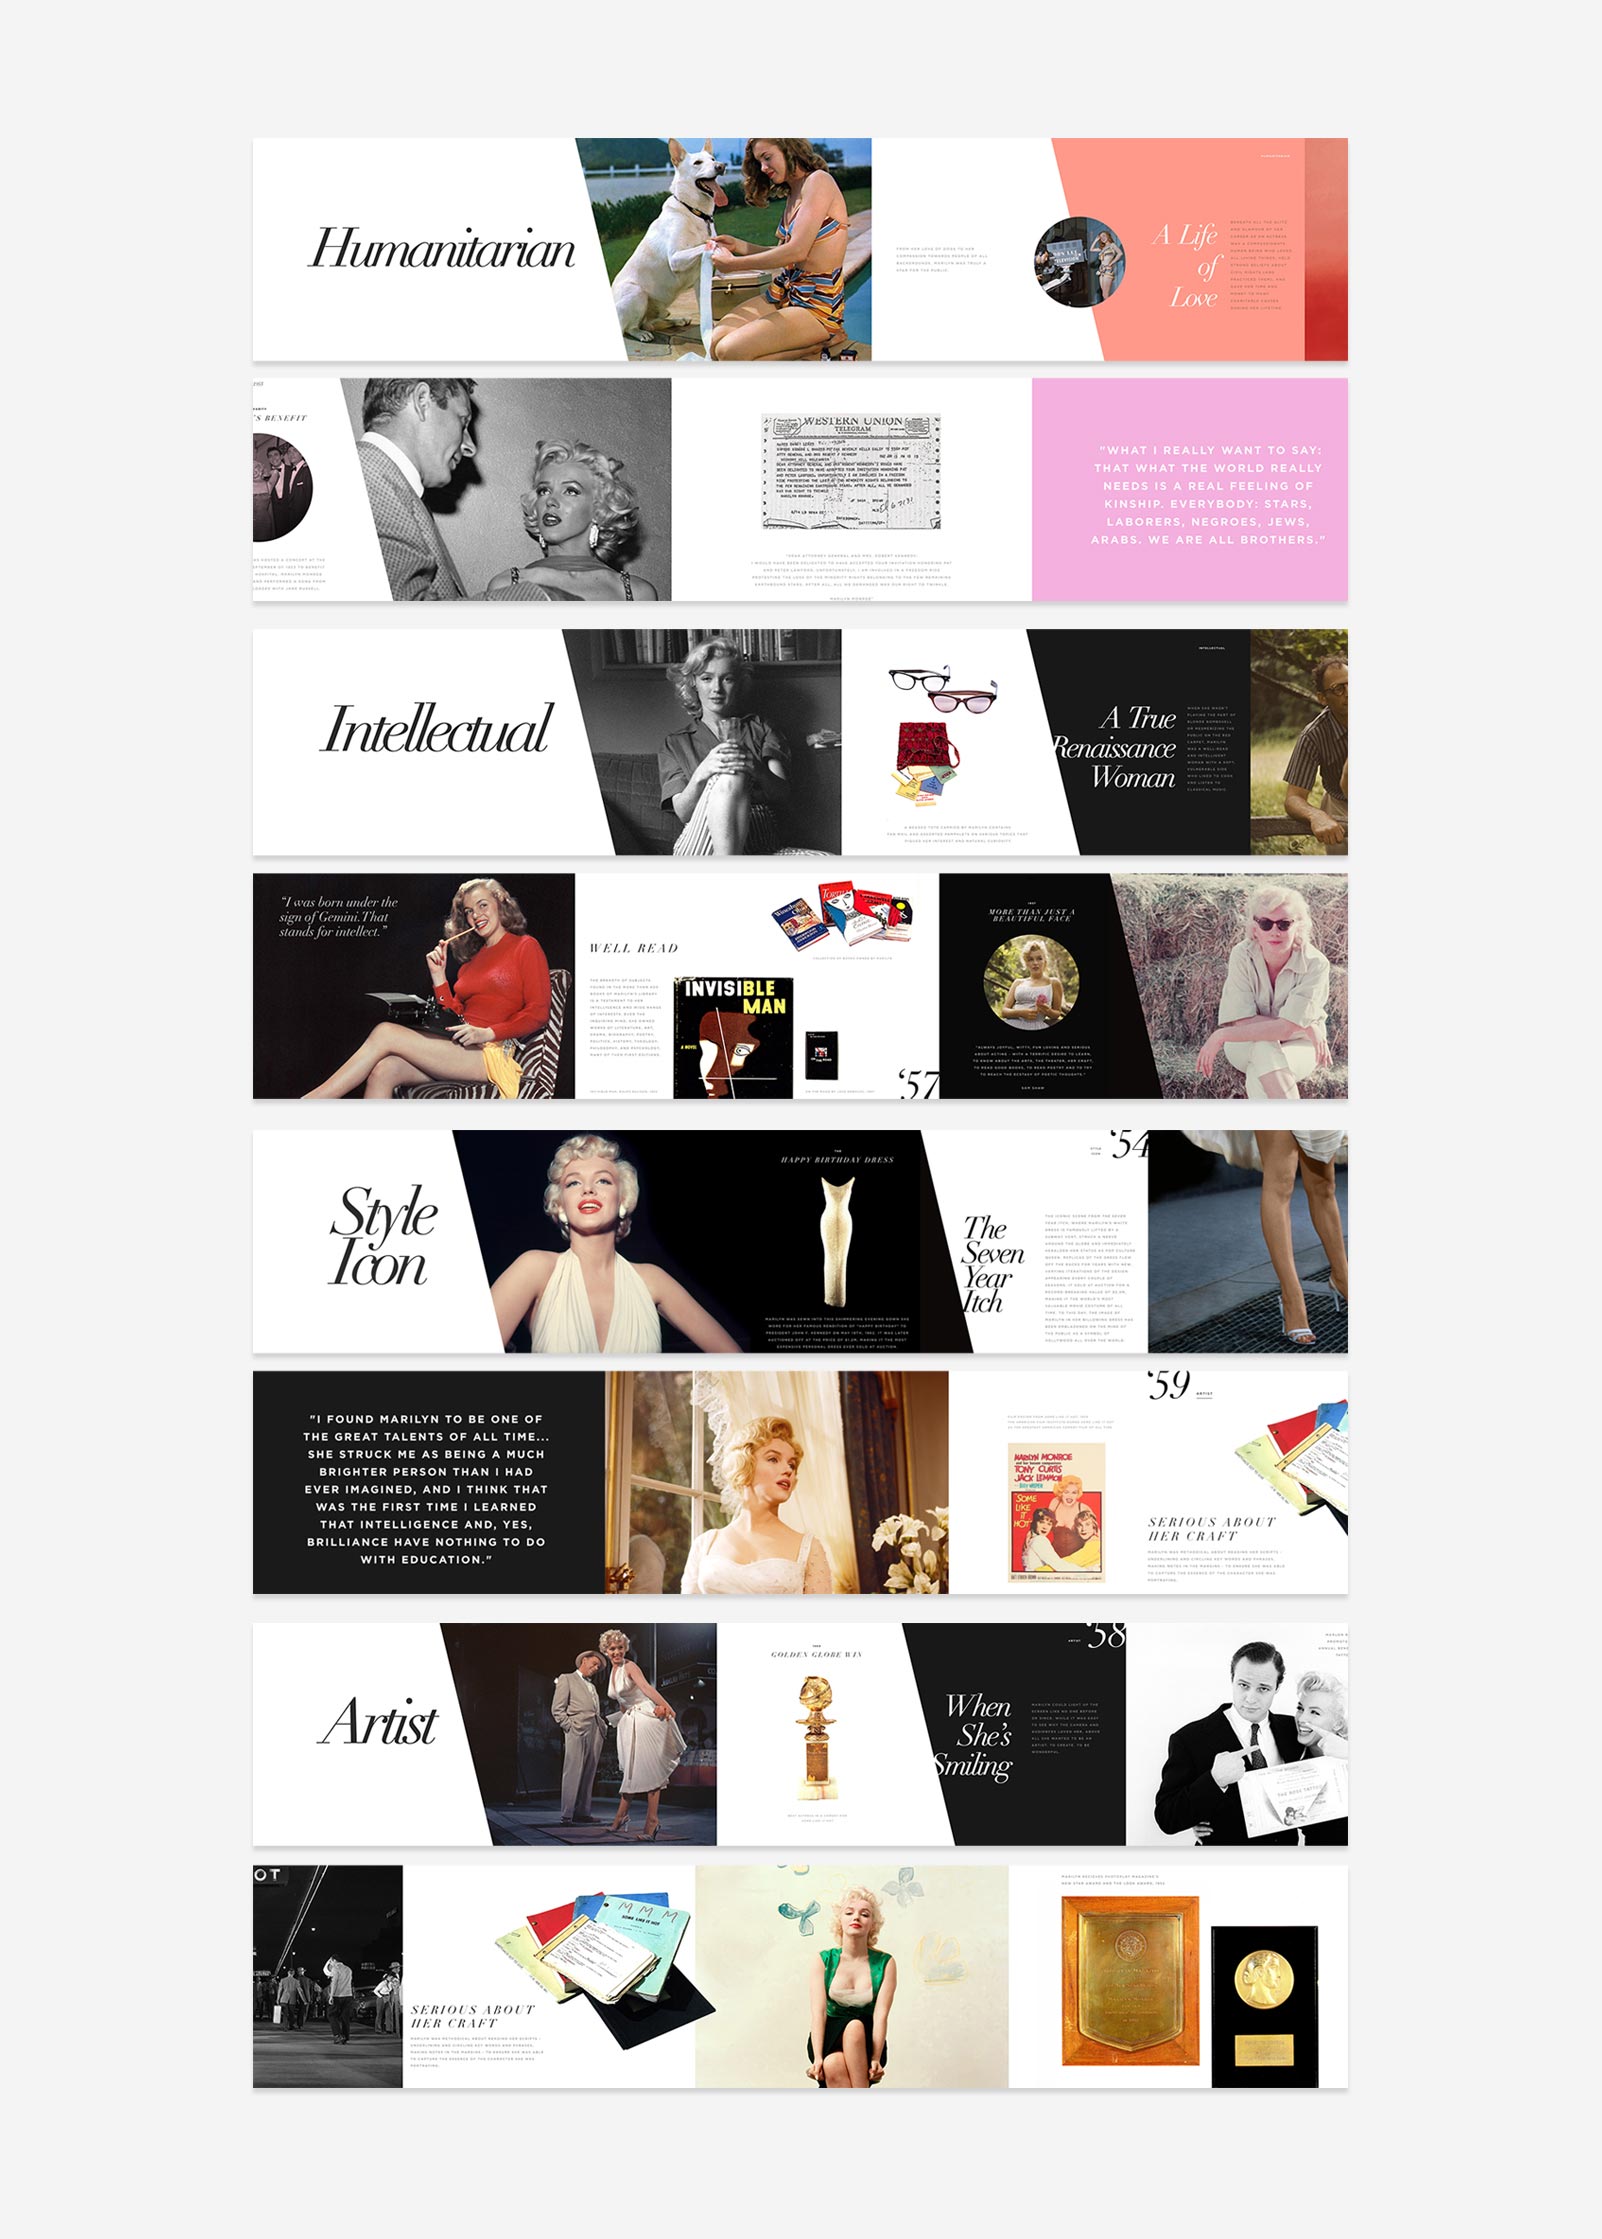 Marilyn_monroe_Website_design_layout_small